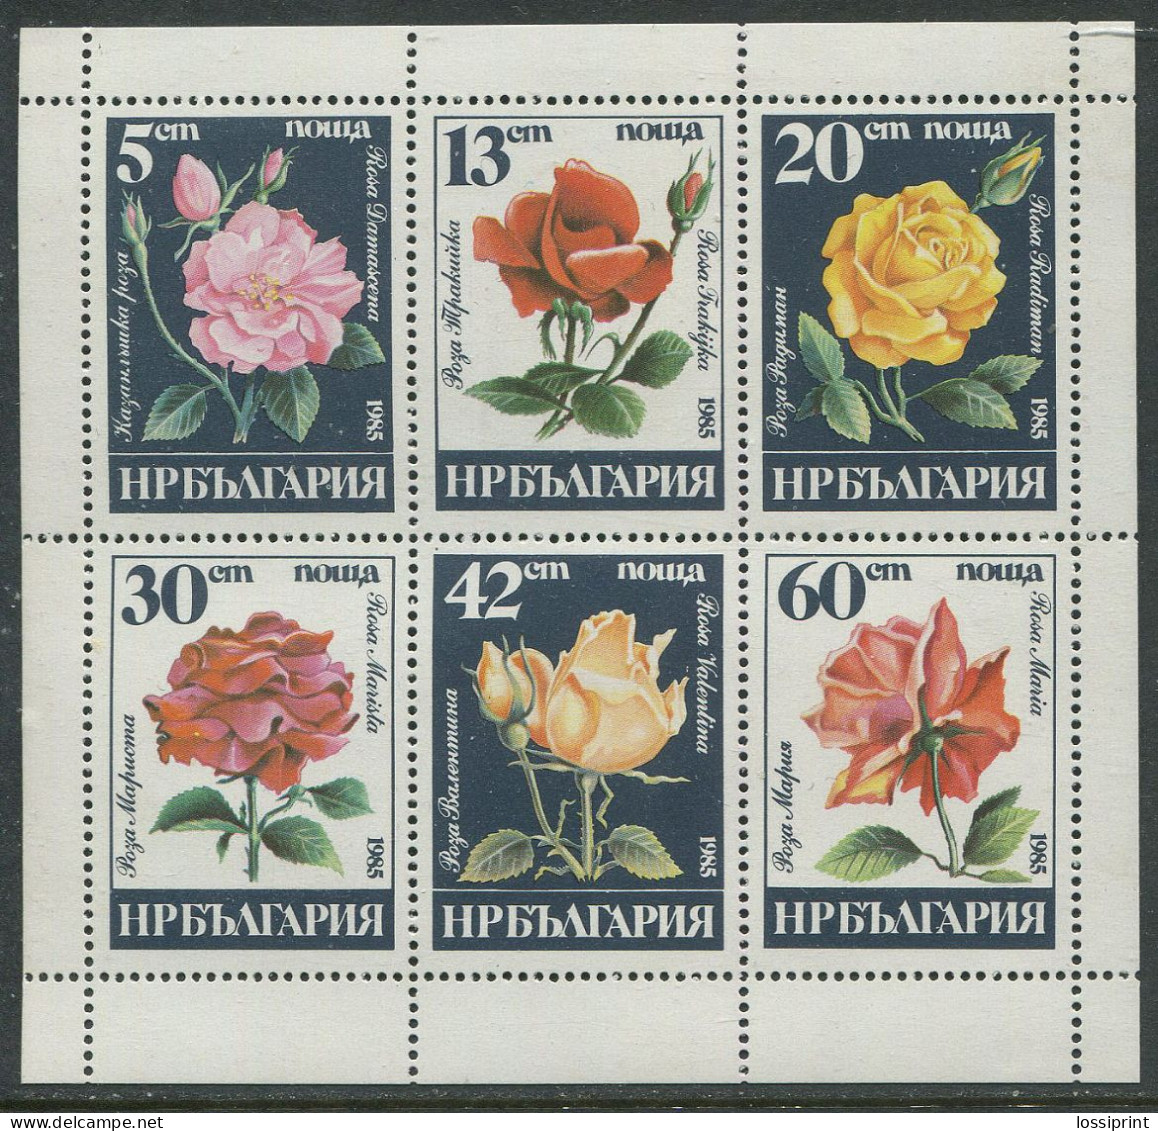 Bulgaria:Unused Block Flowers, Roses, 1985, MNH - Rosen